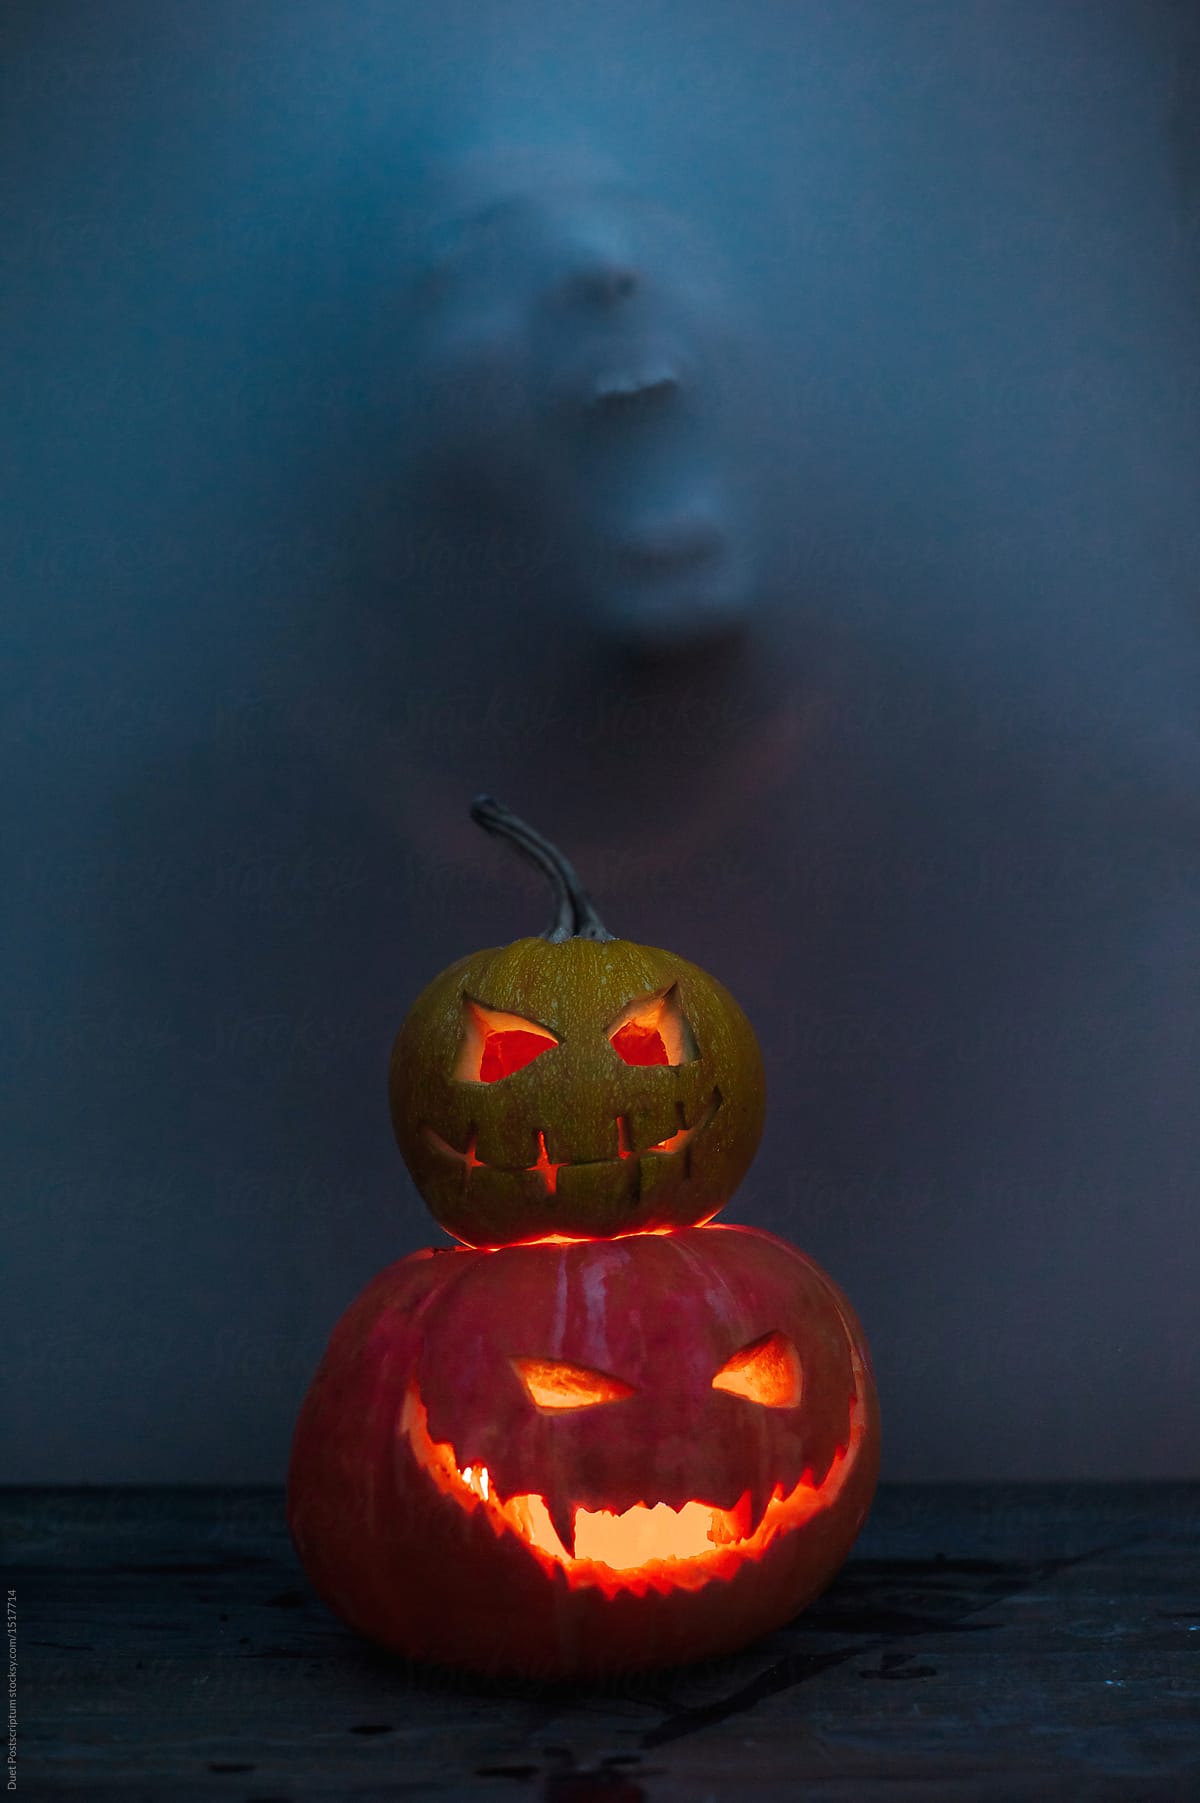 Pumpkin lanterns and mystic face